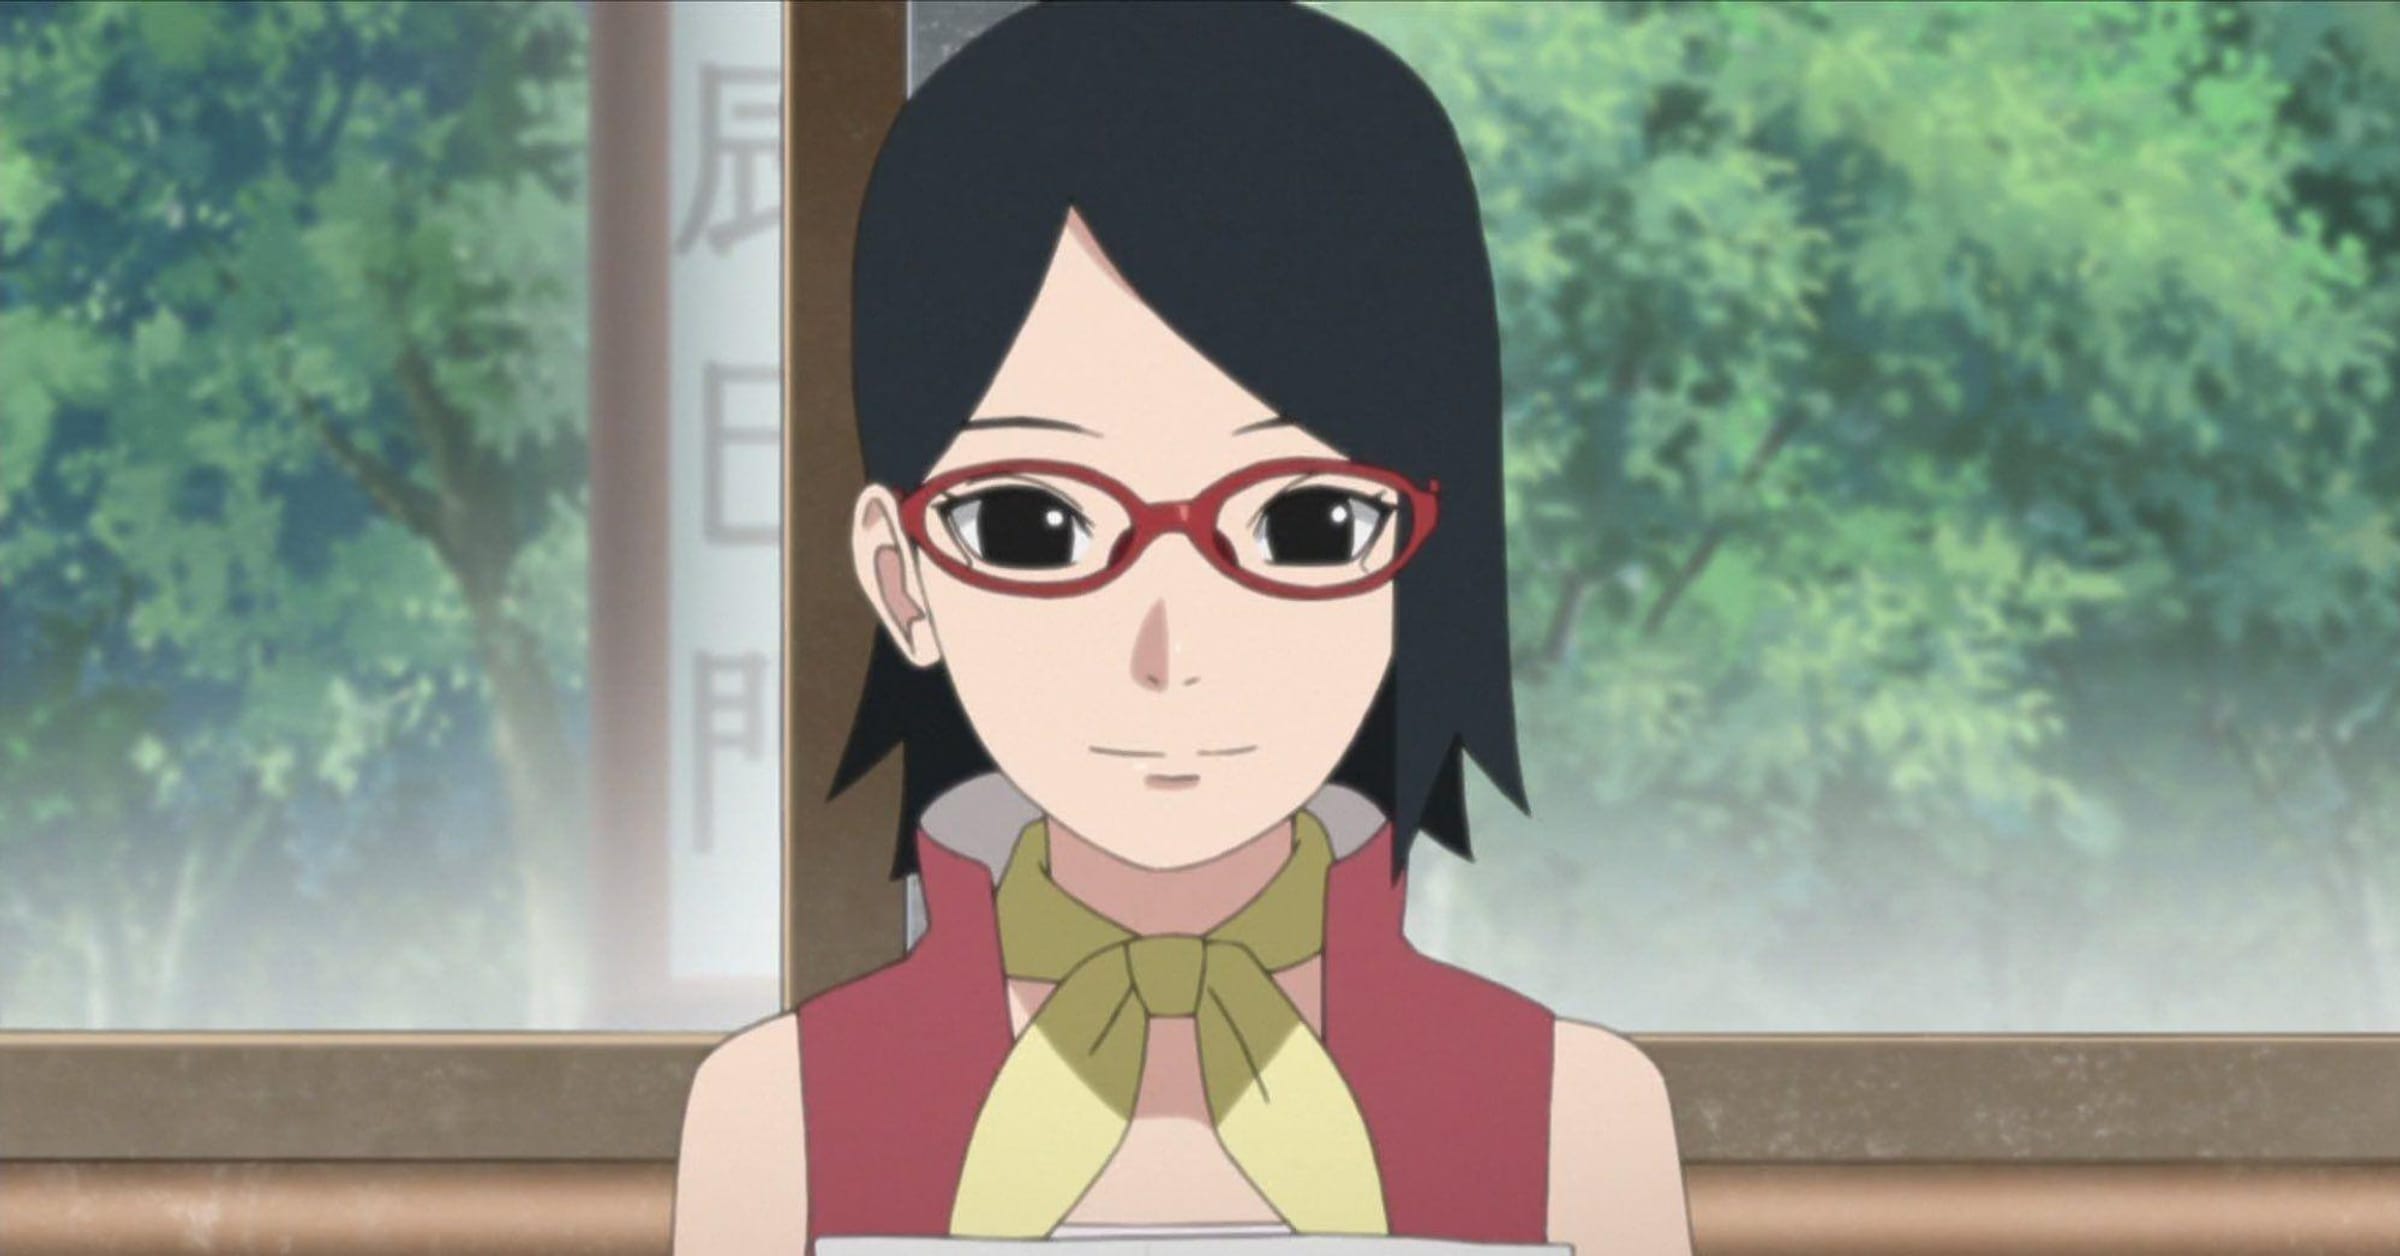 Who is Sarada Uchiha in Naruto?